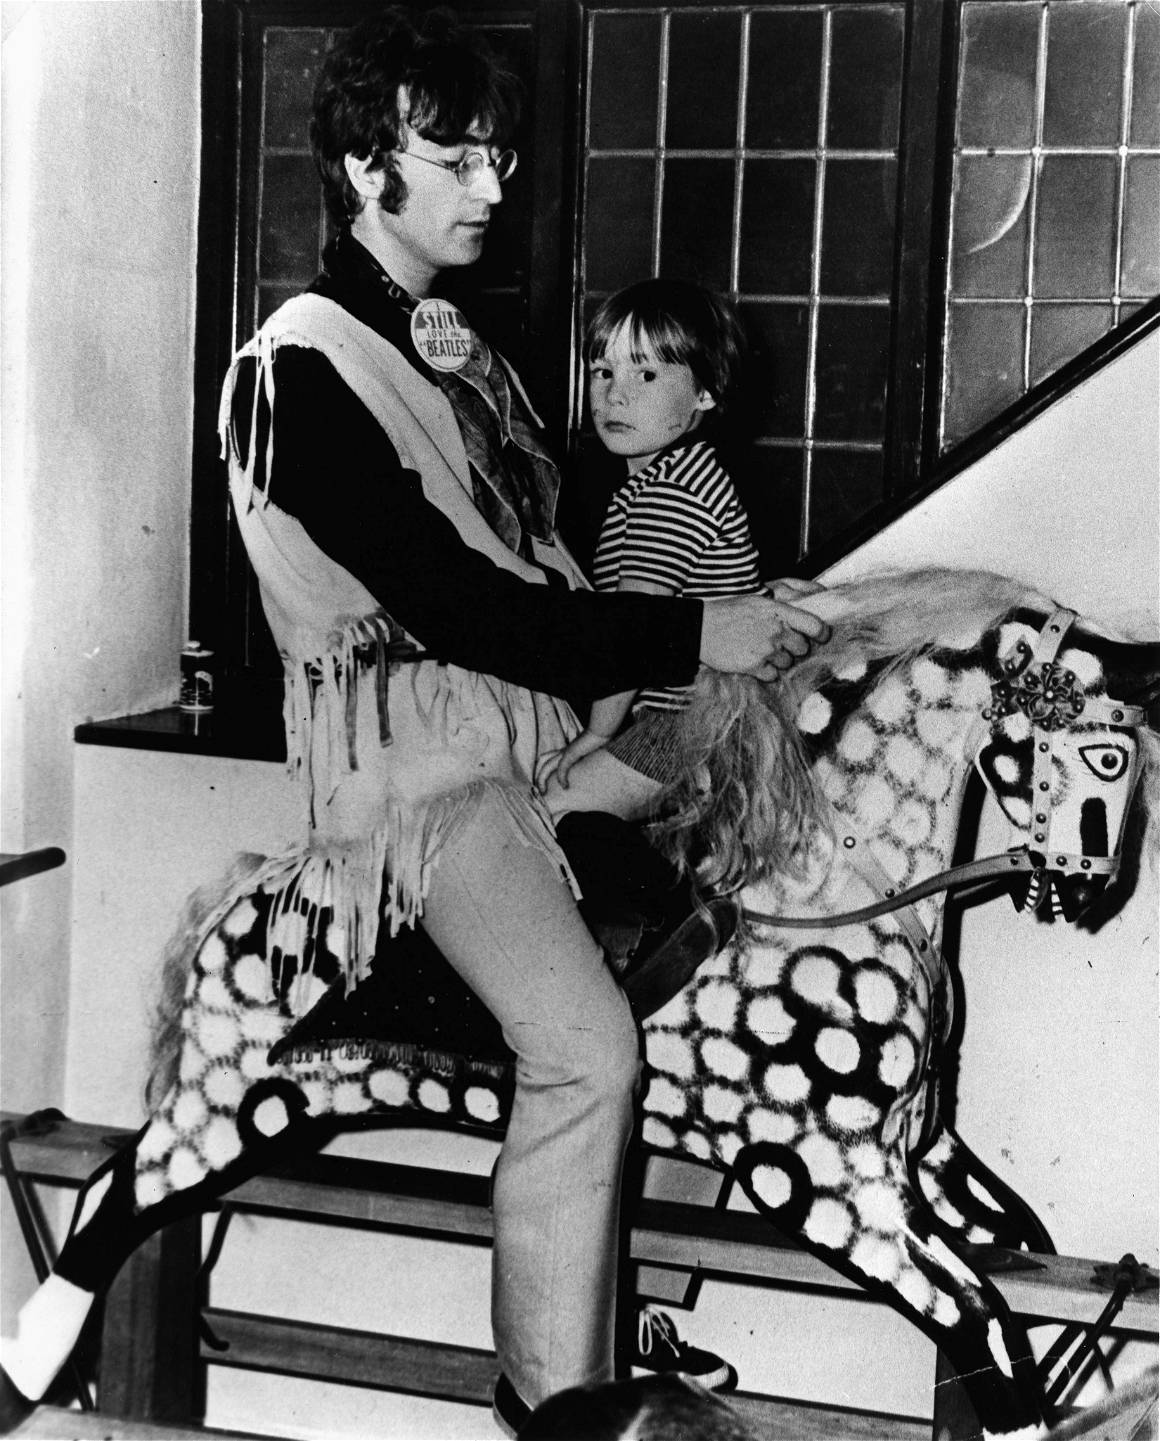 JOHN LENNON (1940-1980) member of The Beatles with his son JULIAN